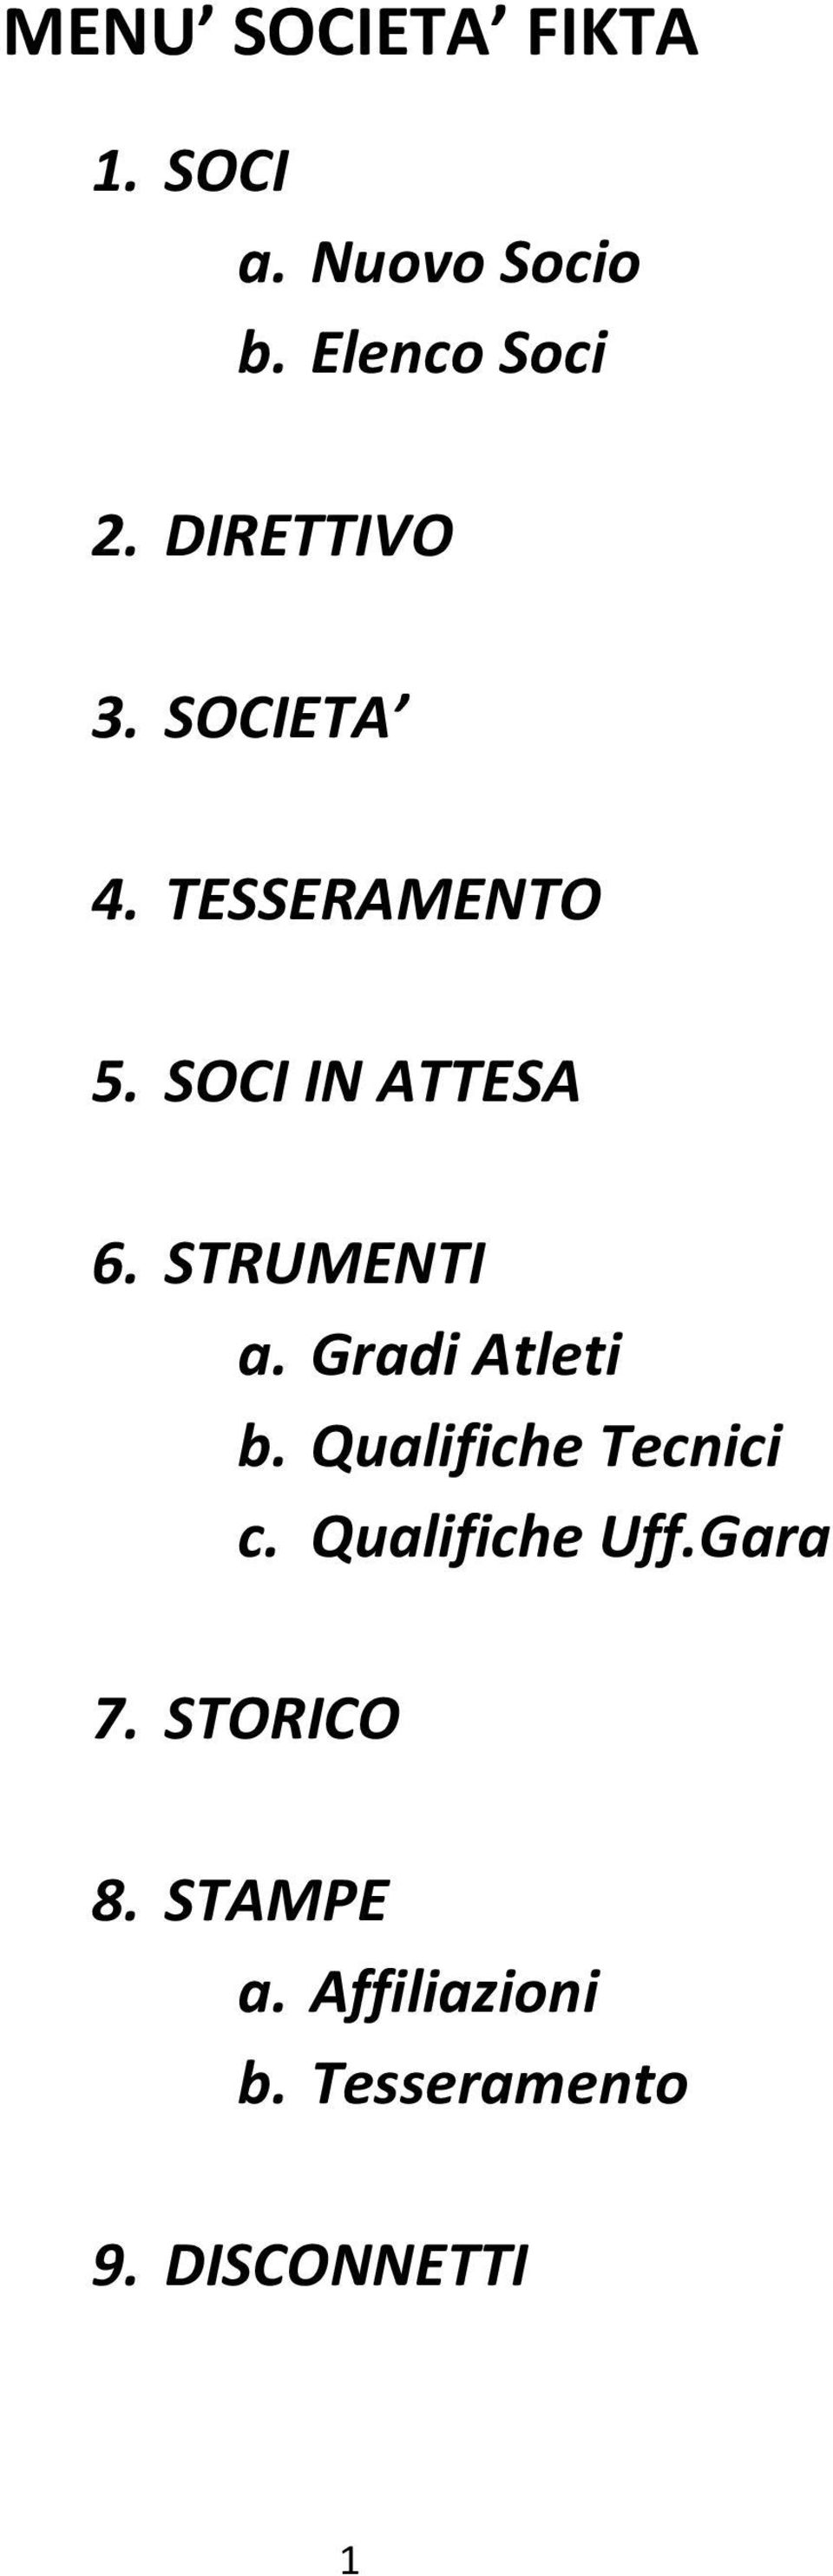 STRUMENTI a. GradiAtleti b. QualificheTecnici c. QualificheUff.